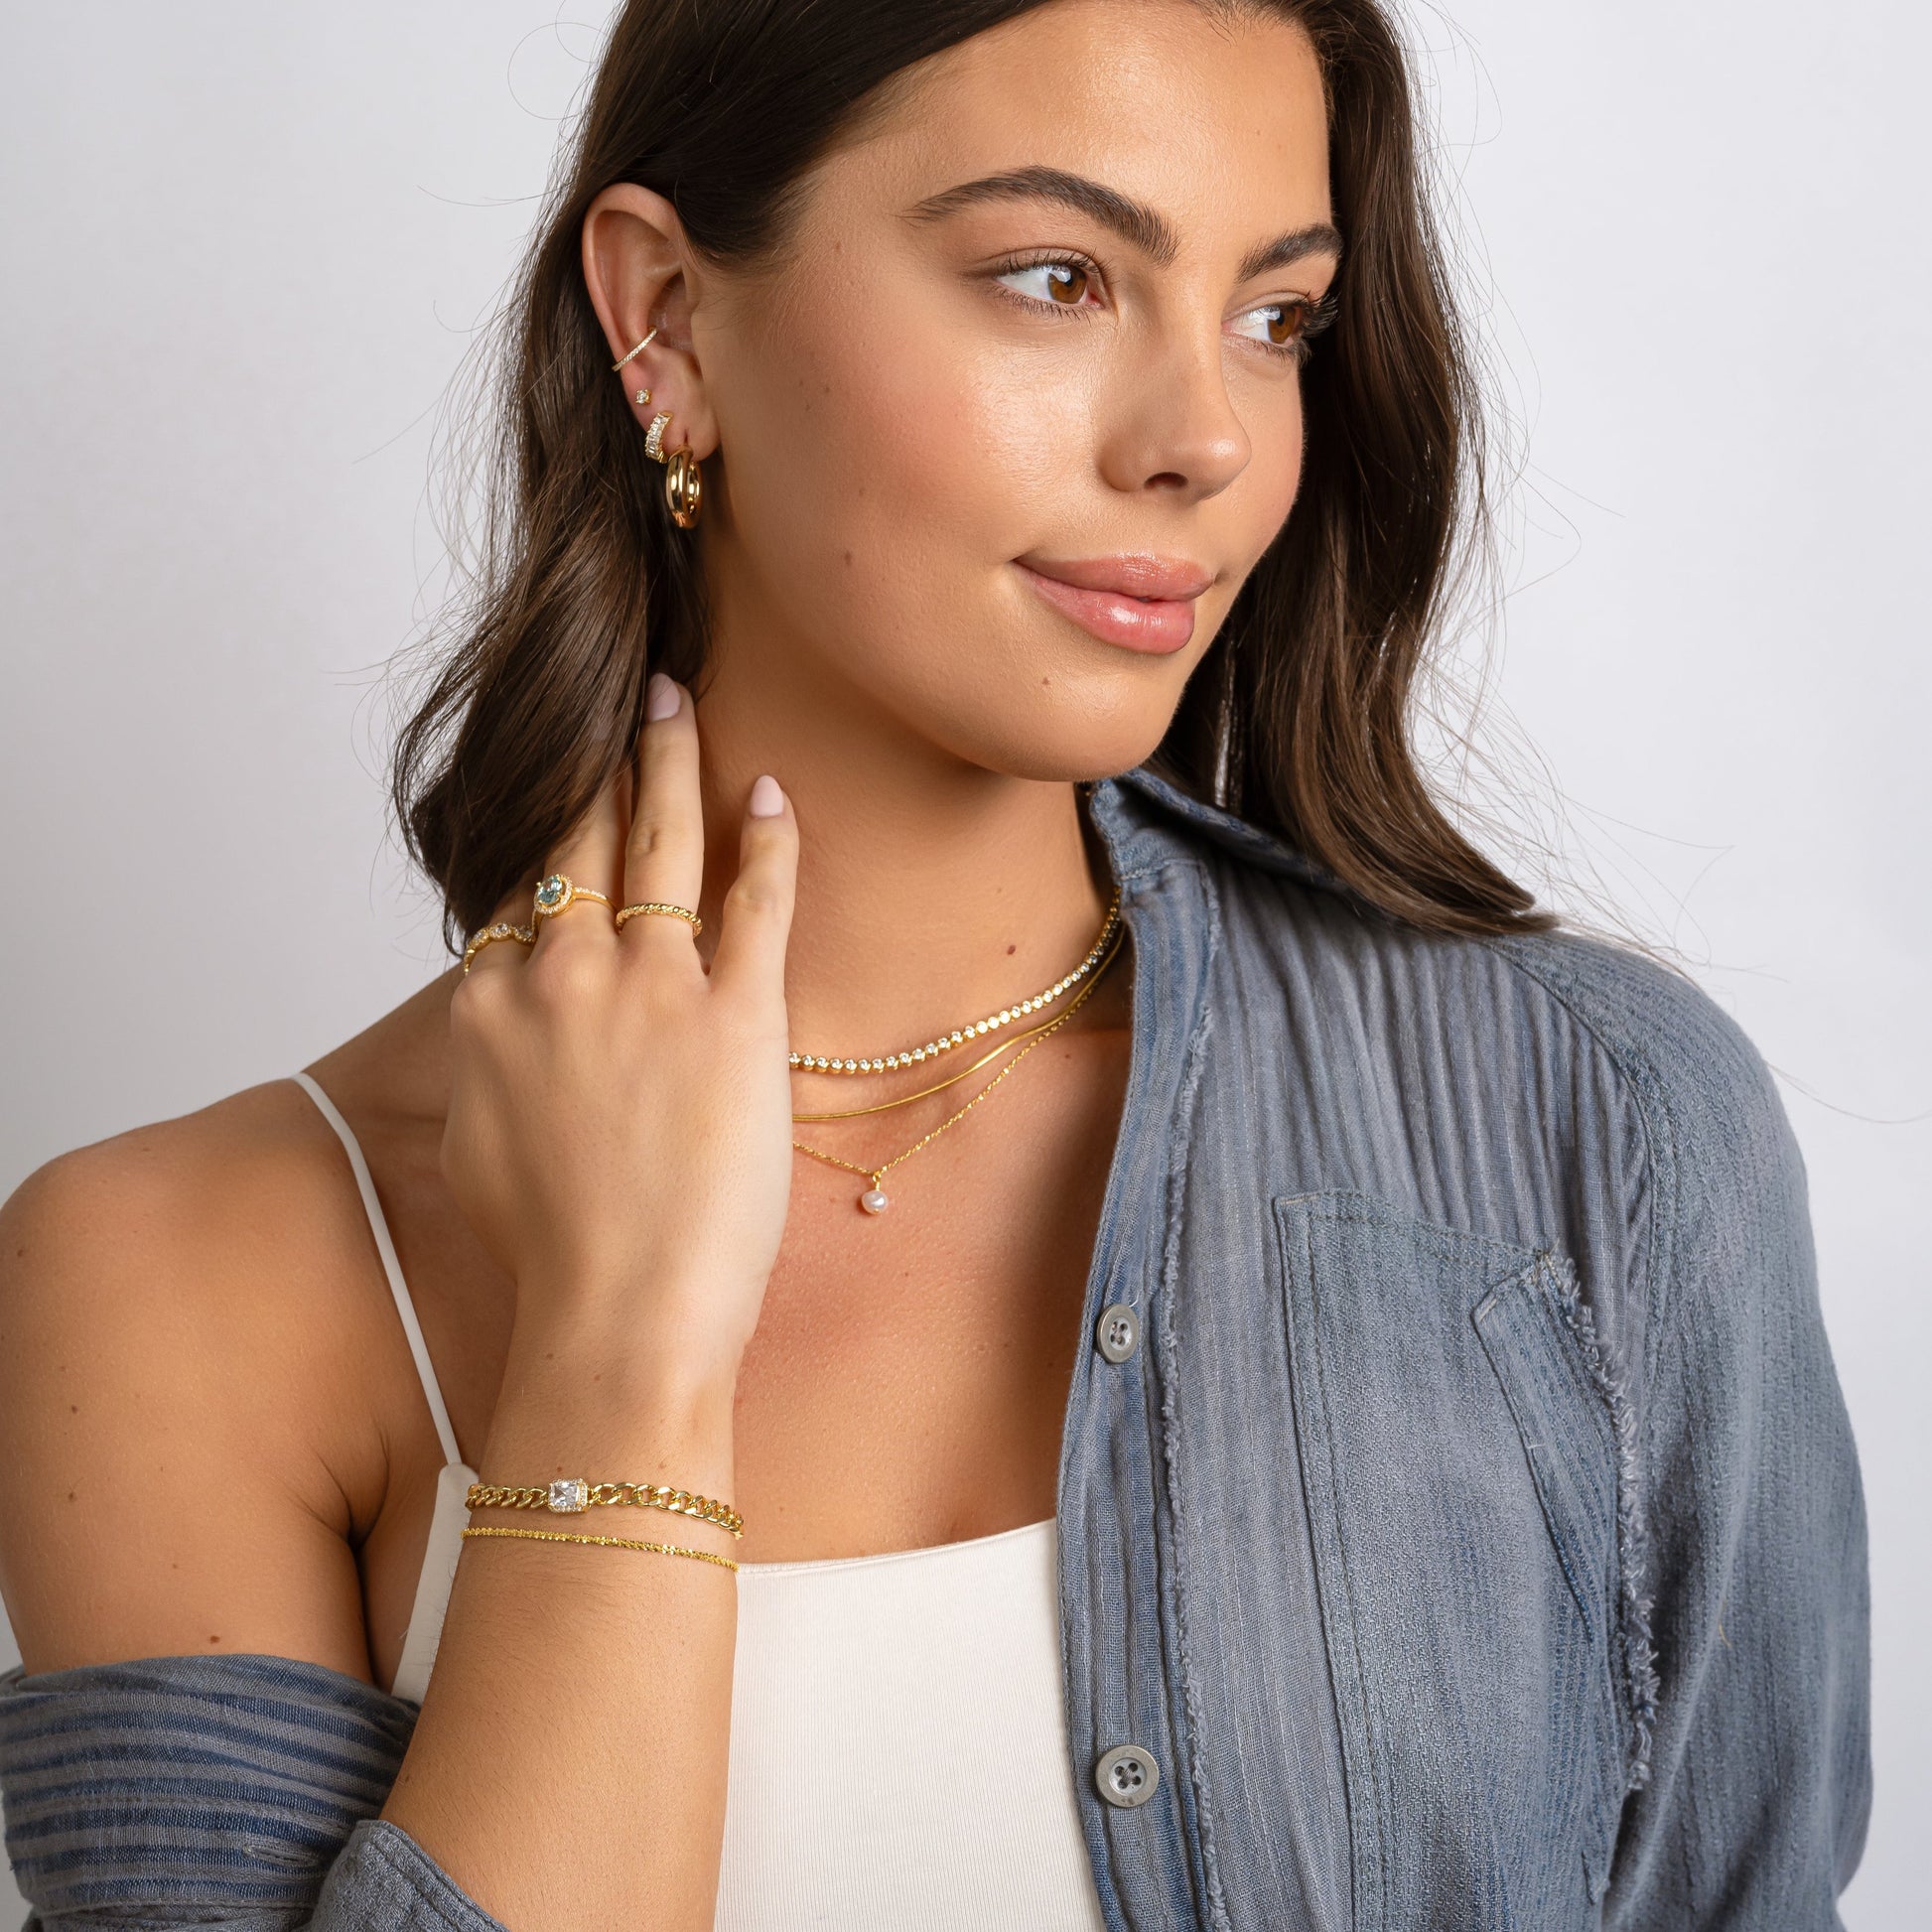 model wearing gold minimalist jewelry